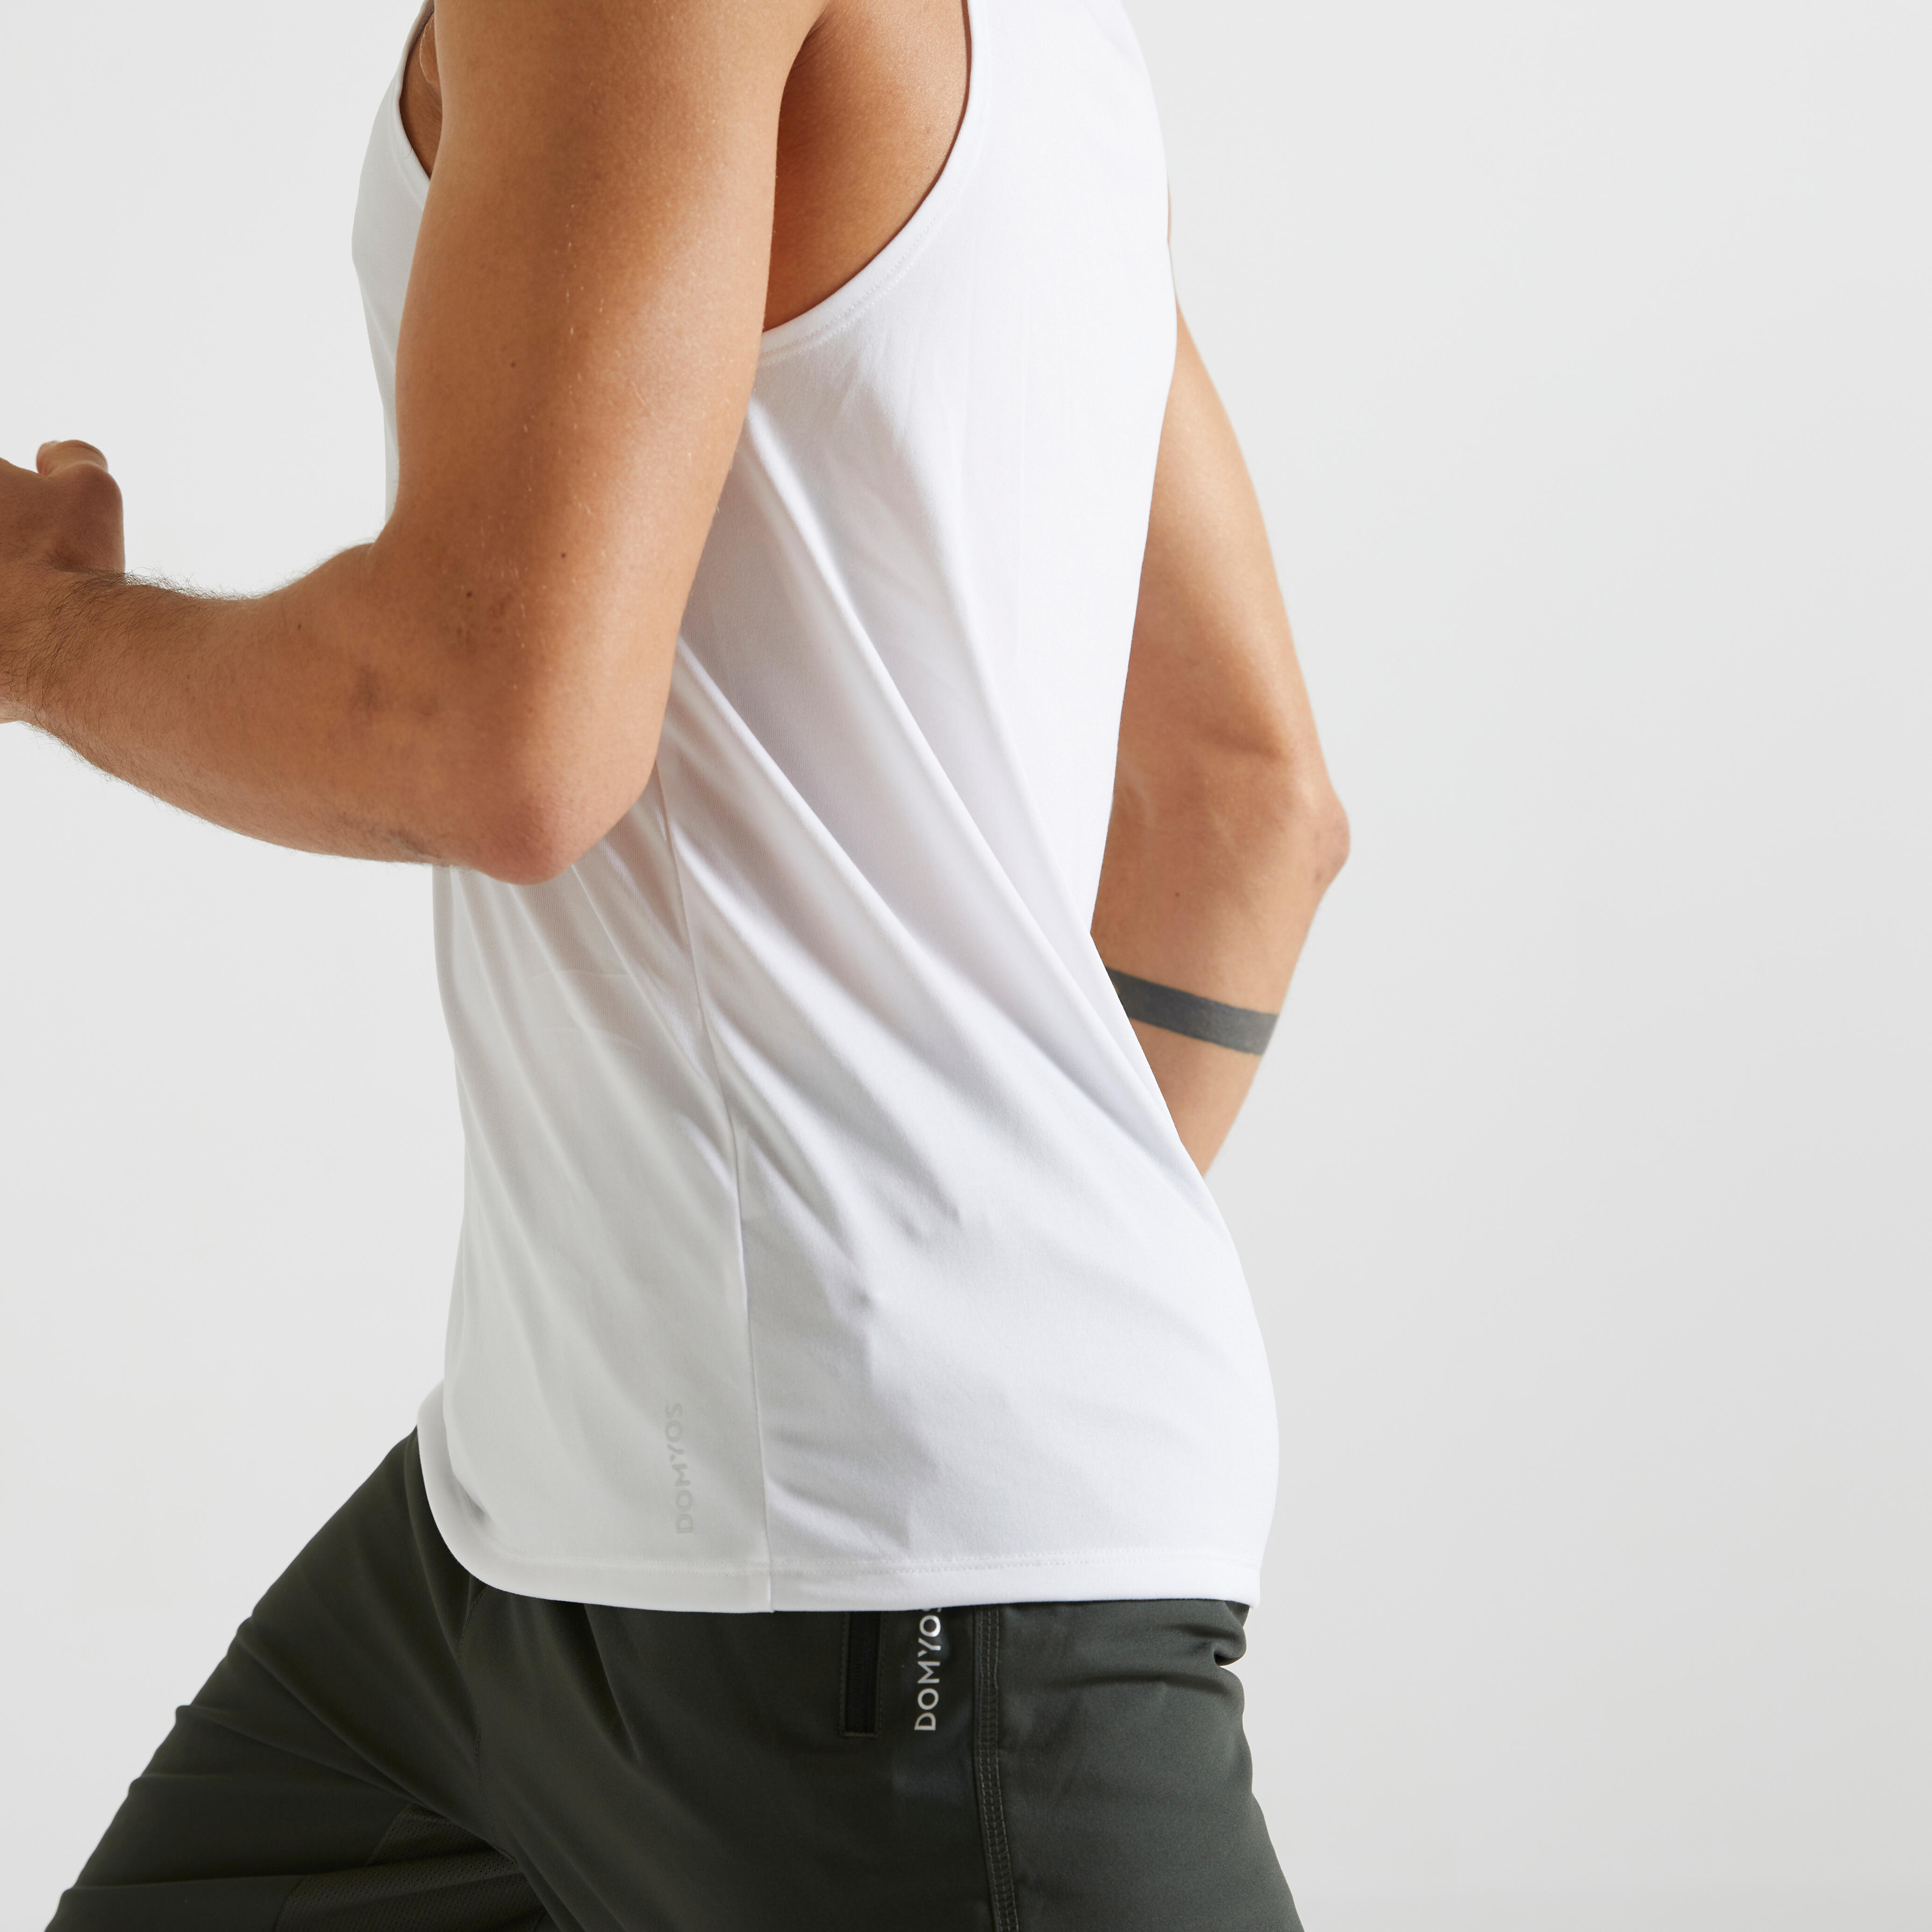 Men's Gym Tank Top – Essential 100 White - DOMYOS